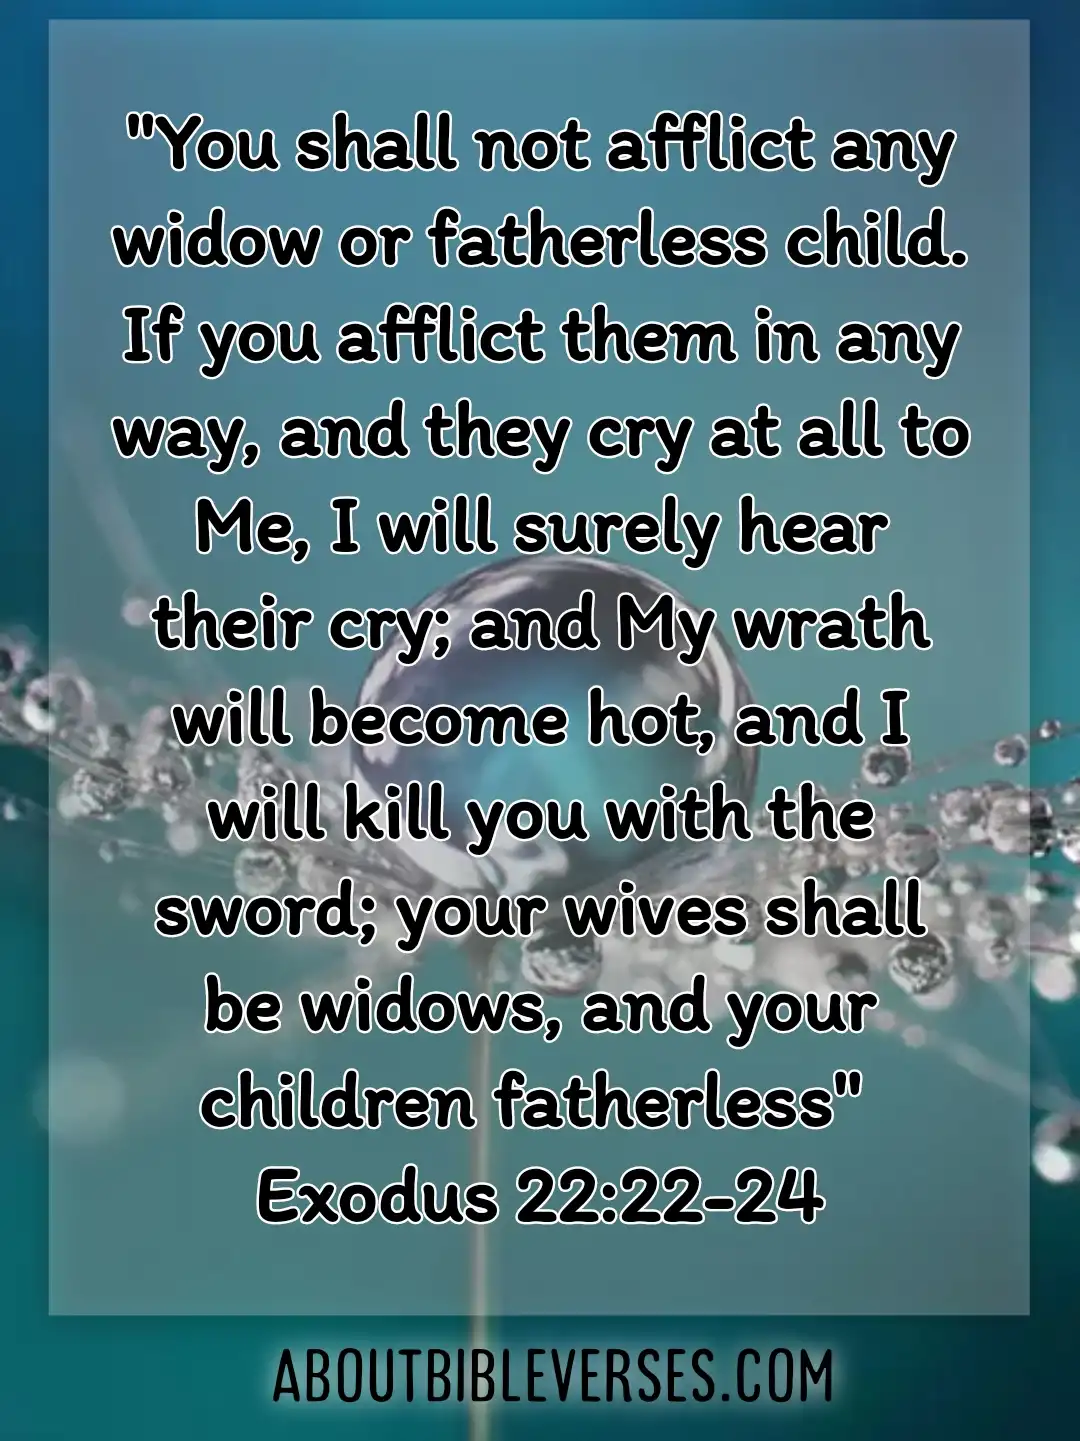 bible verses about widows (Exodus 22:22-24)